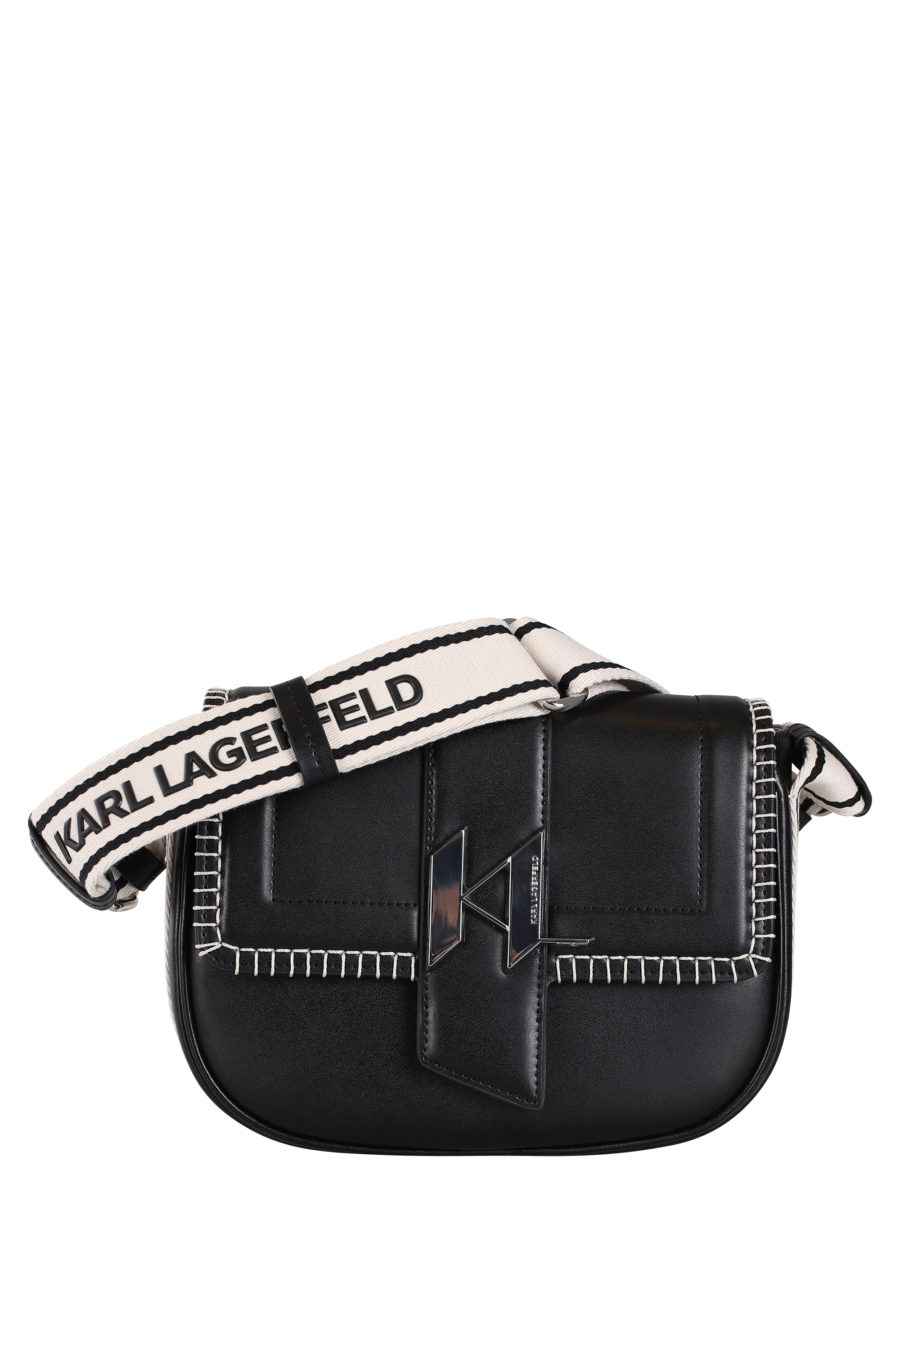 Black bag with beige details and metal logo - IMG 9809